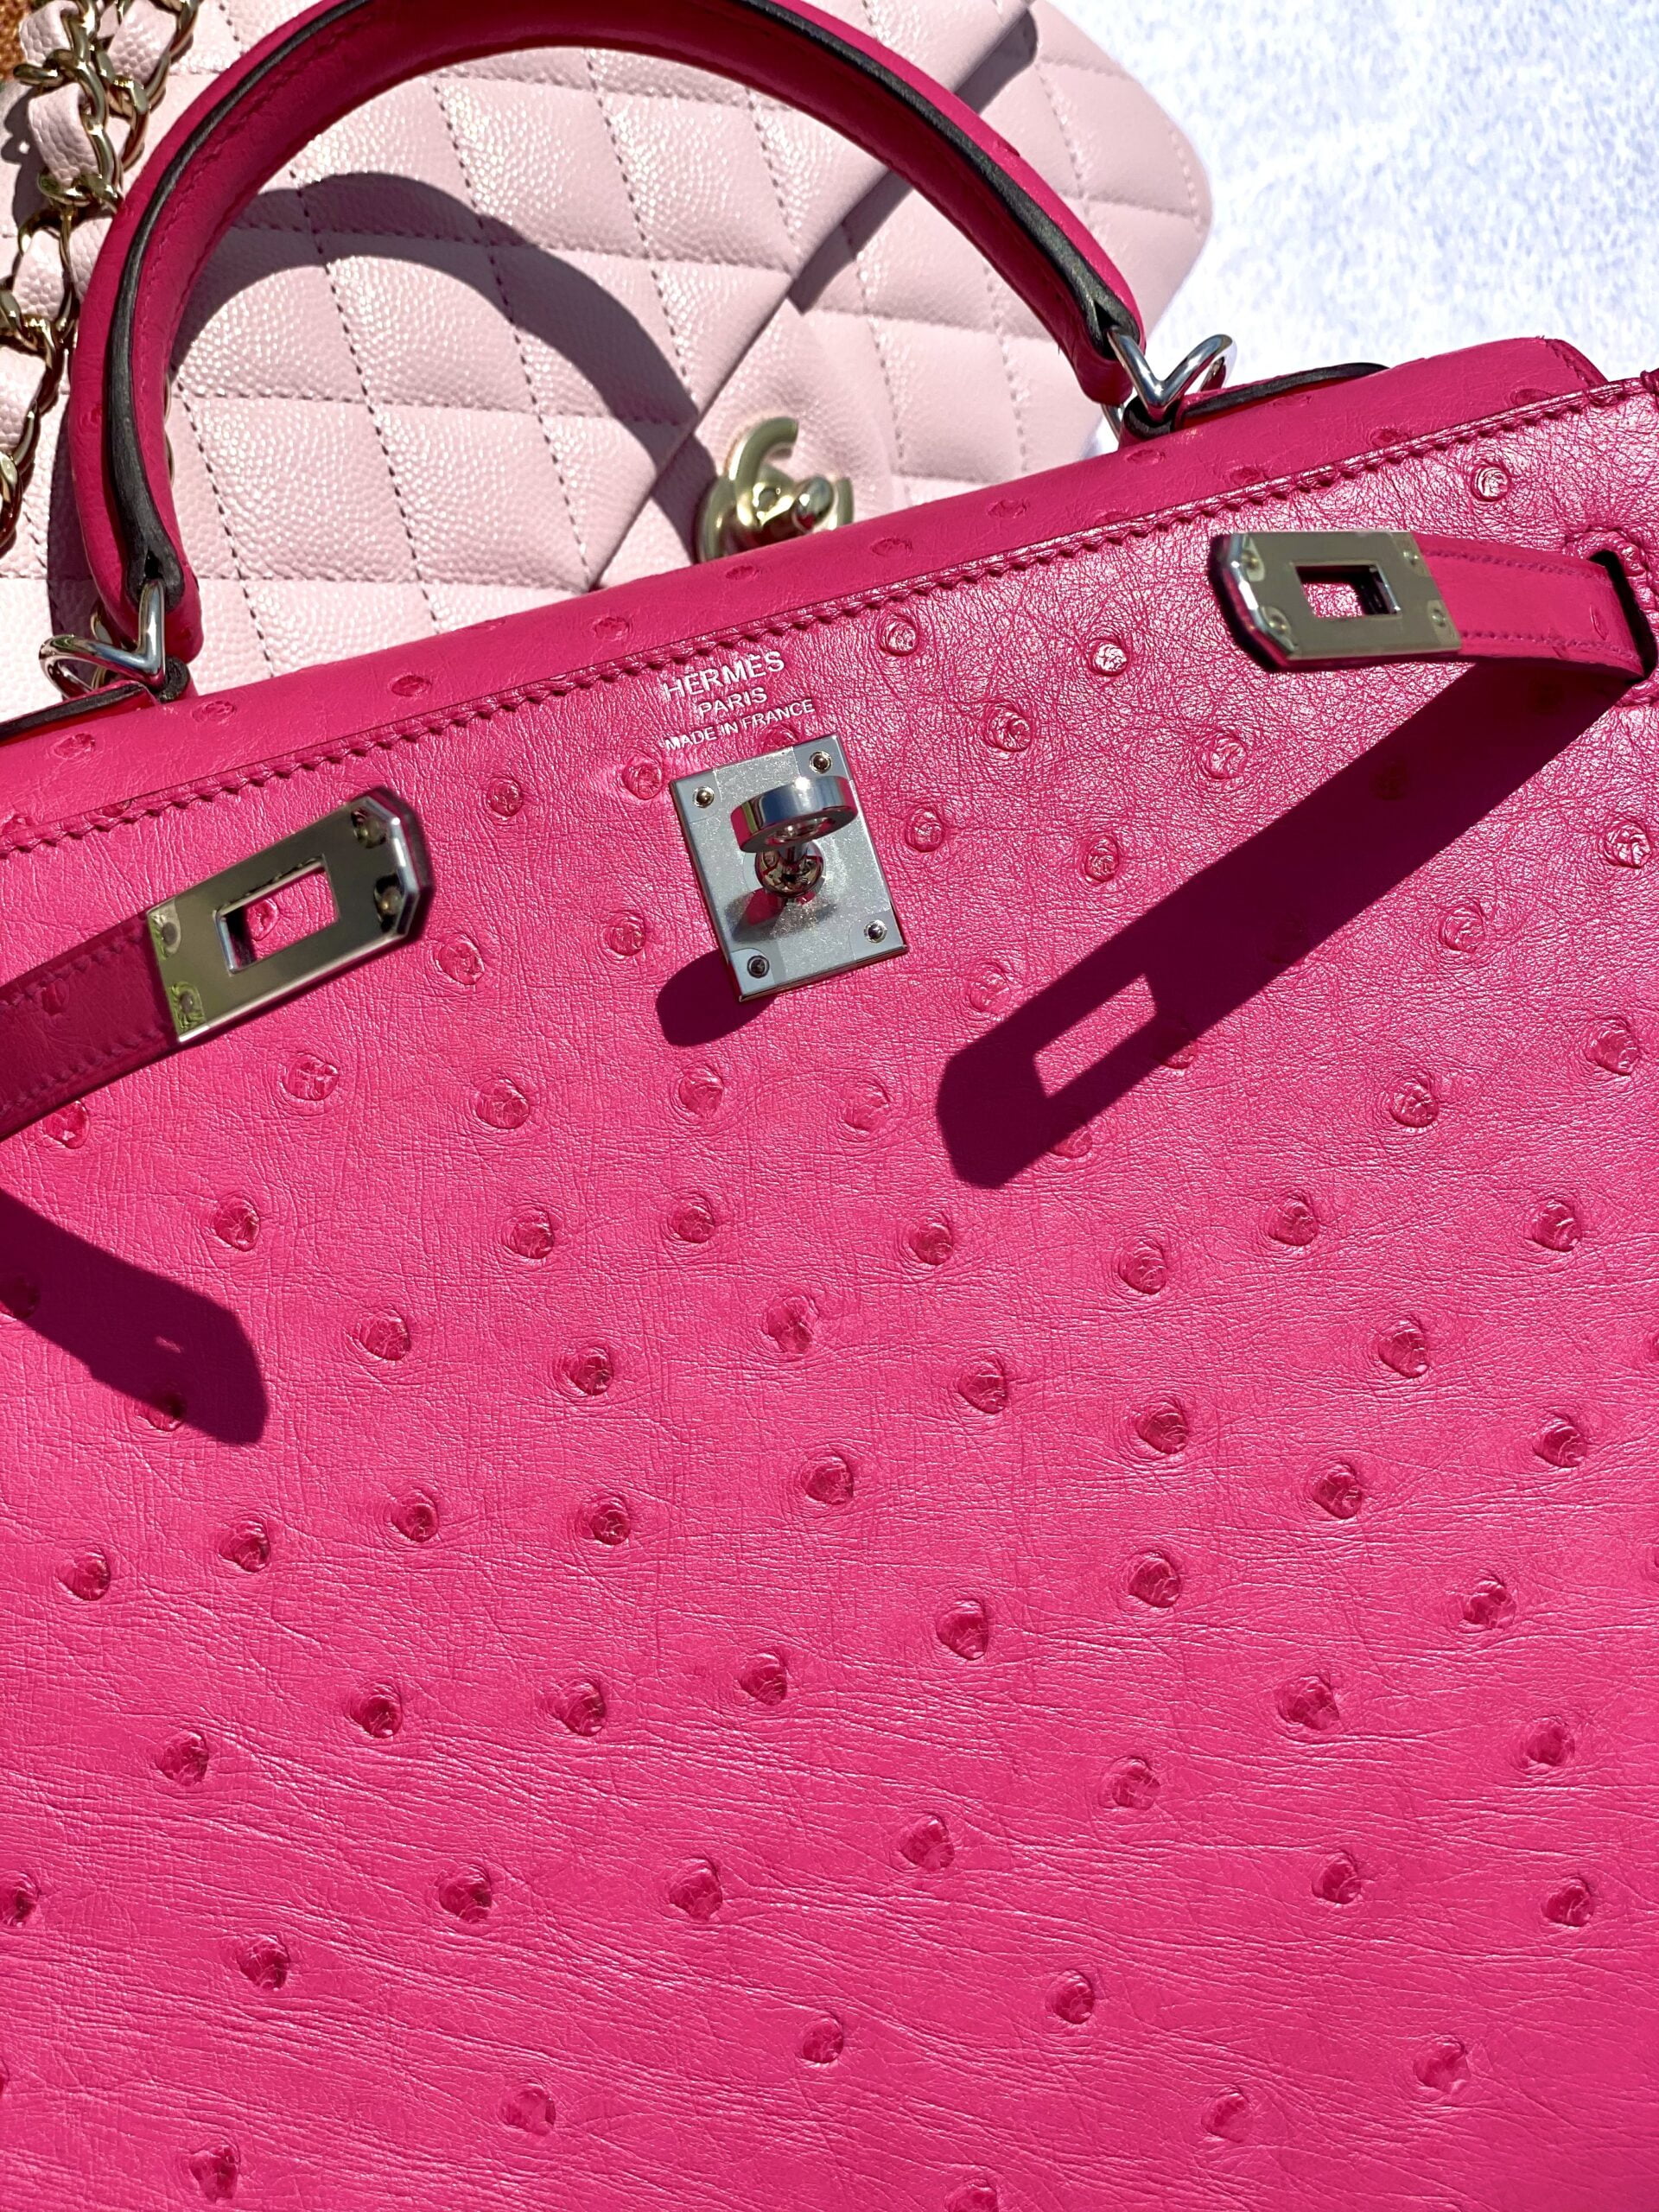 Hermès Birkin Rose Tyrien Handbag